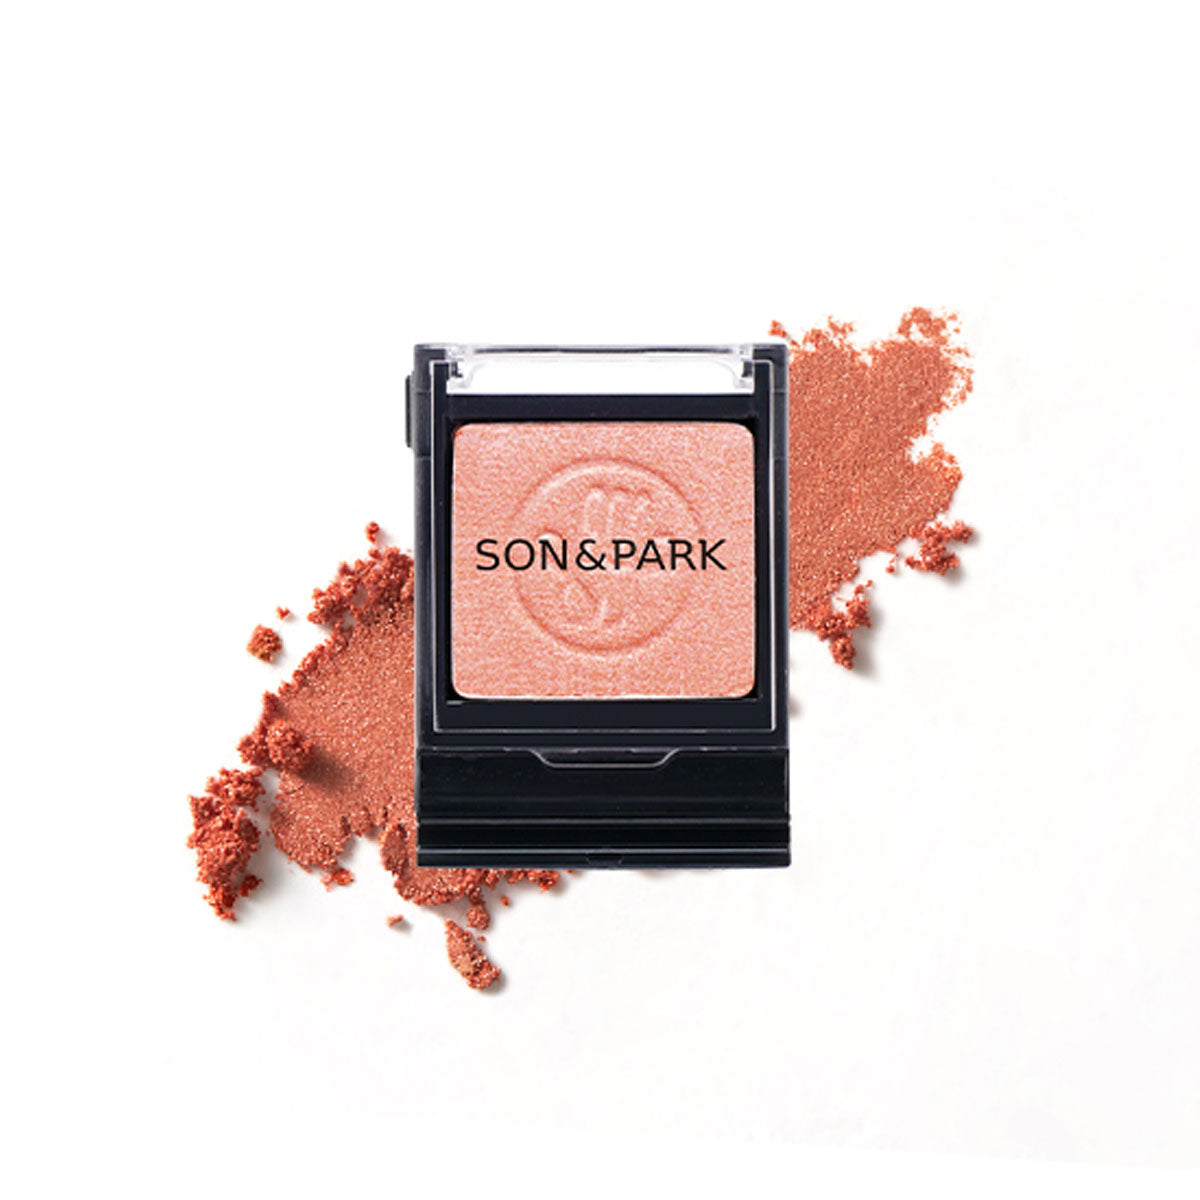 Son & Park - Eye Trailer Single Shimmer - 01 Vibrant Coral